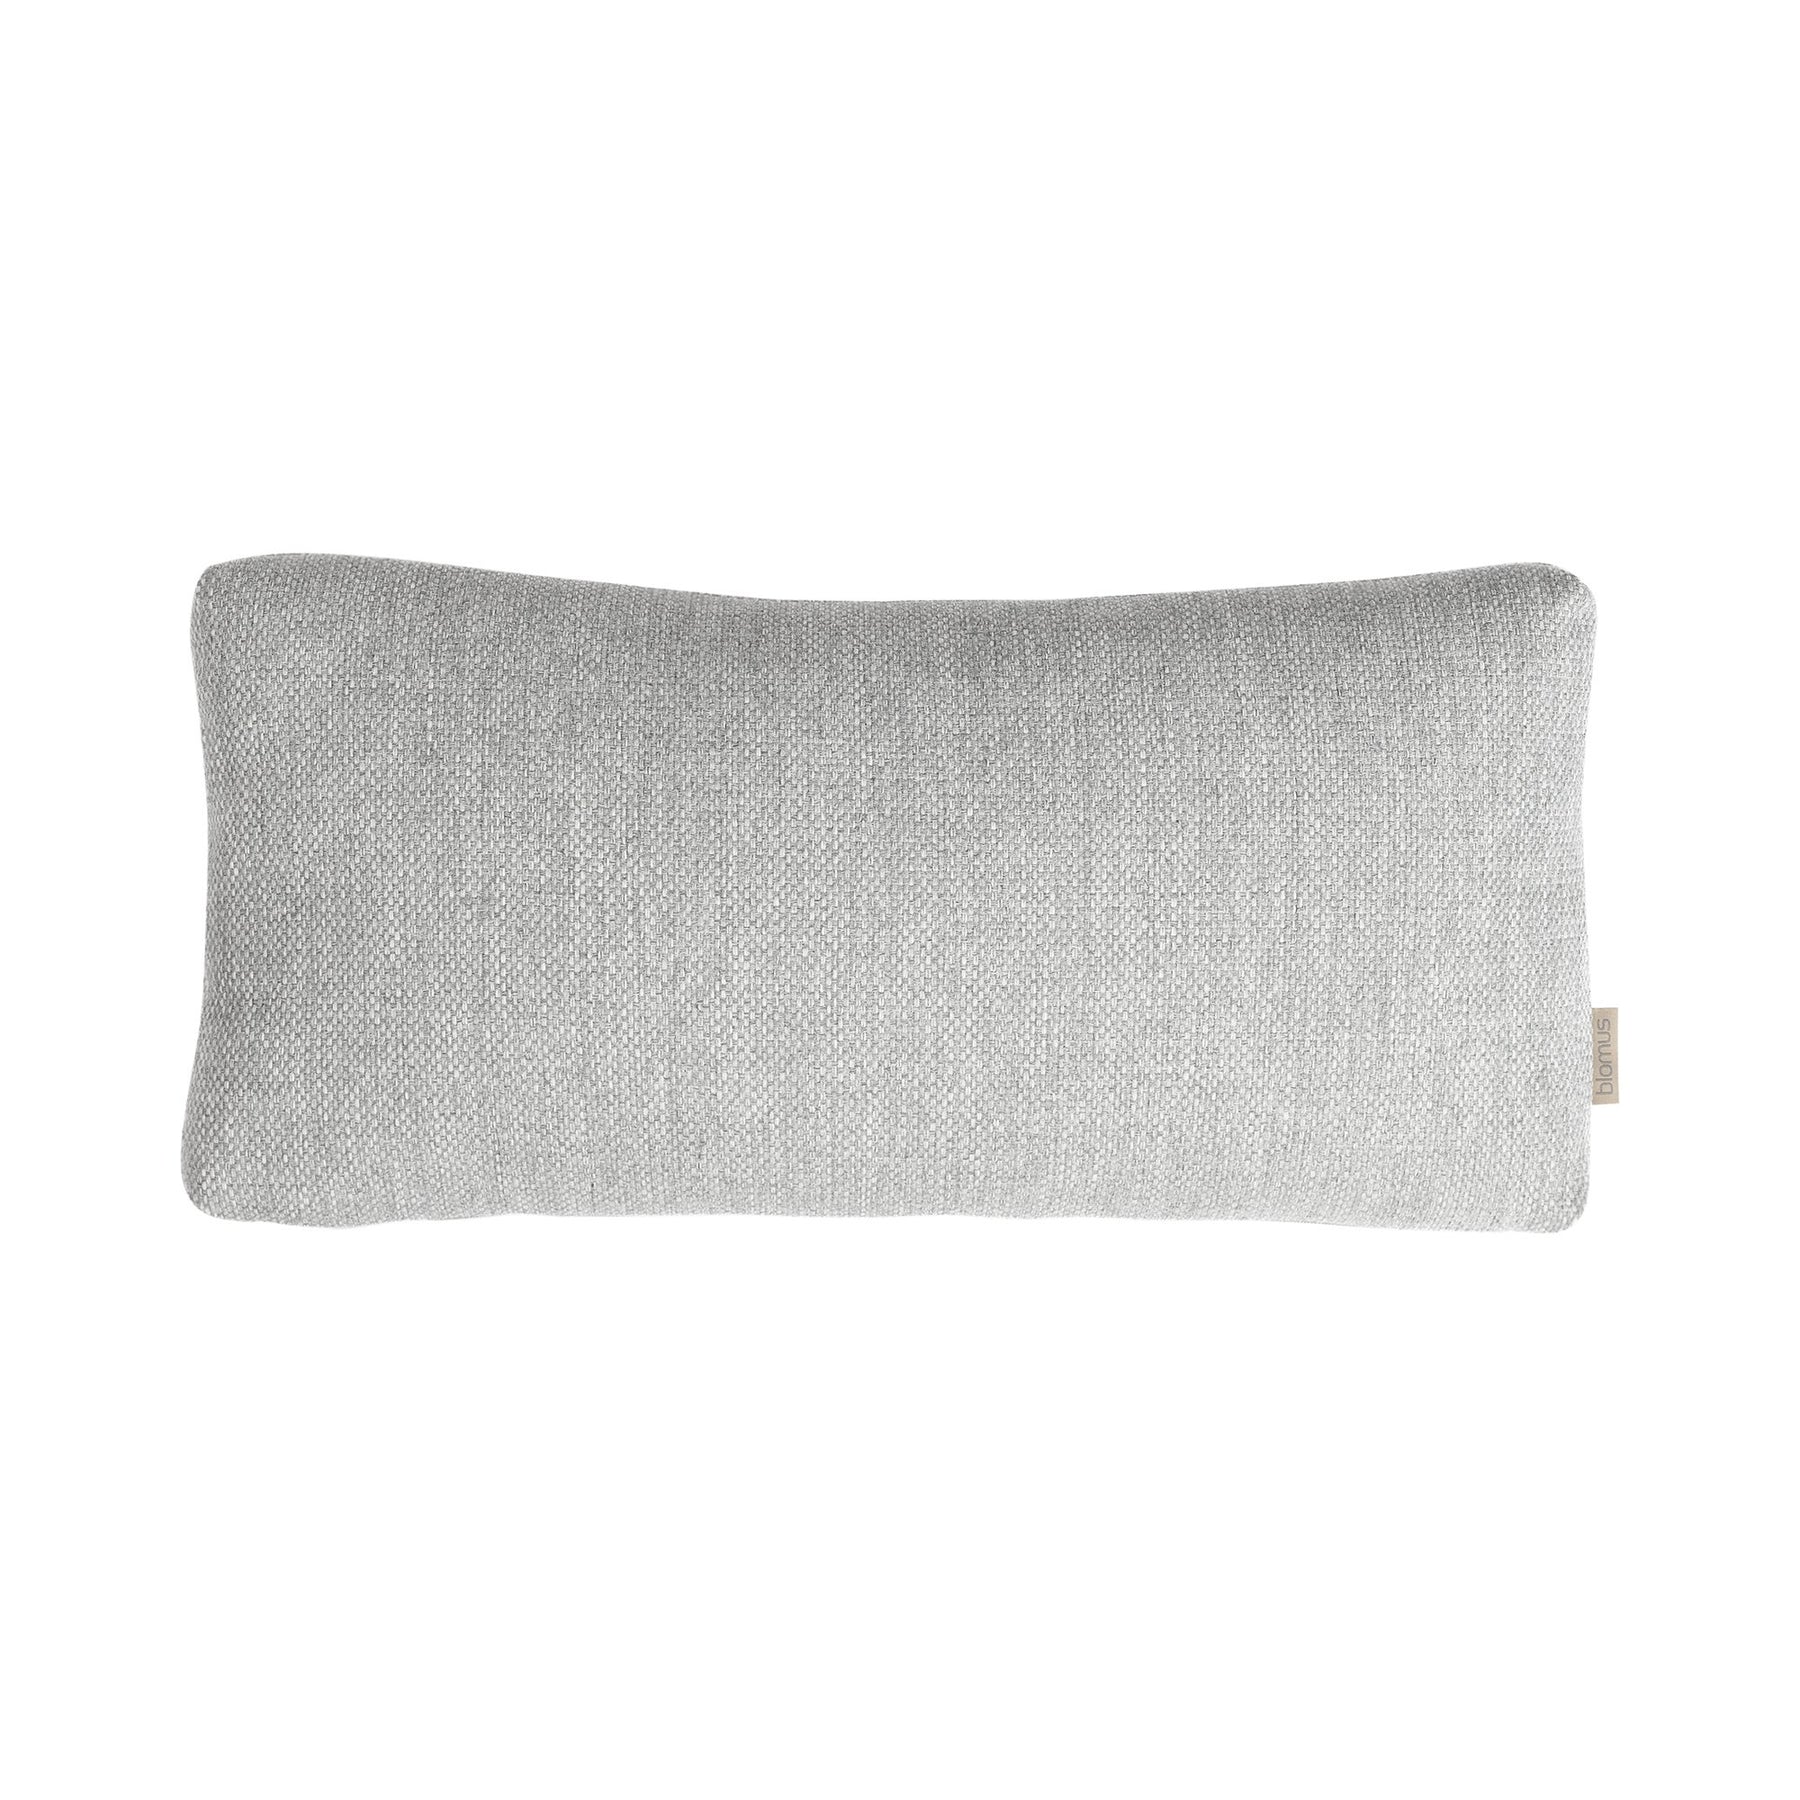 GROW Cushions For Outdoor Patio Furniture Cloud (light grey)